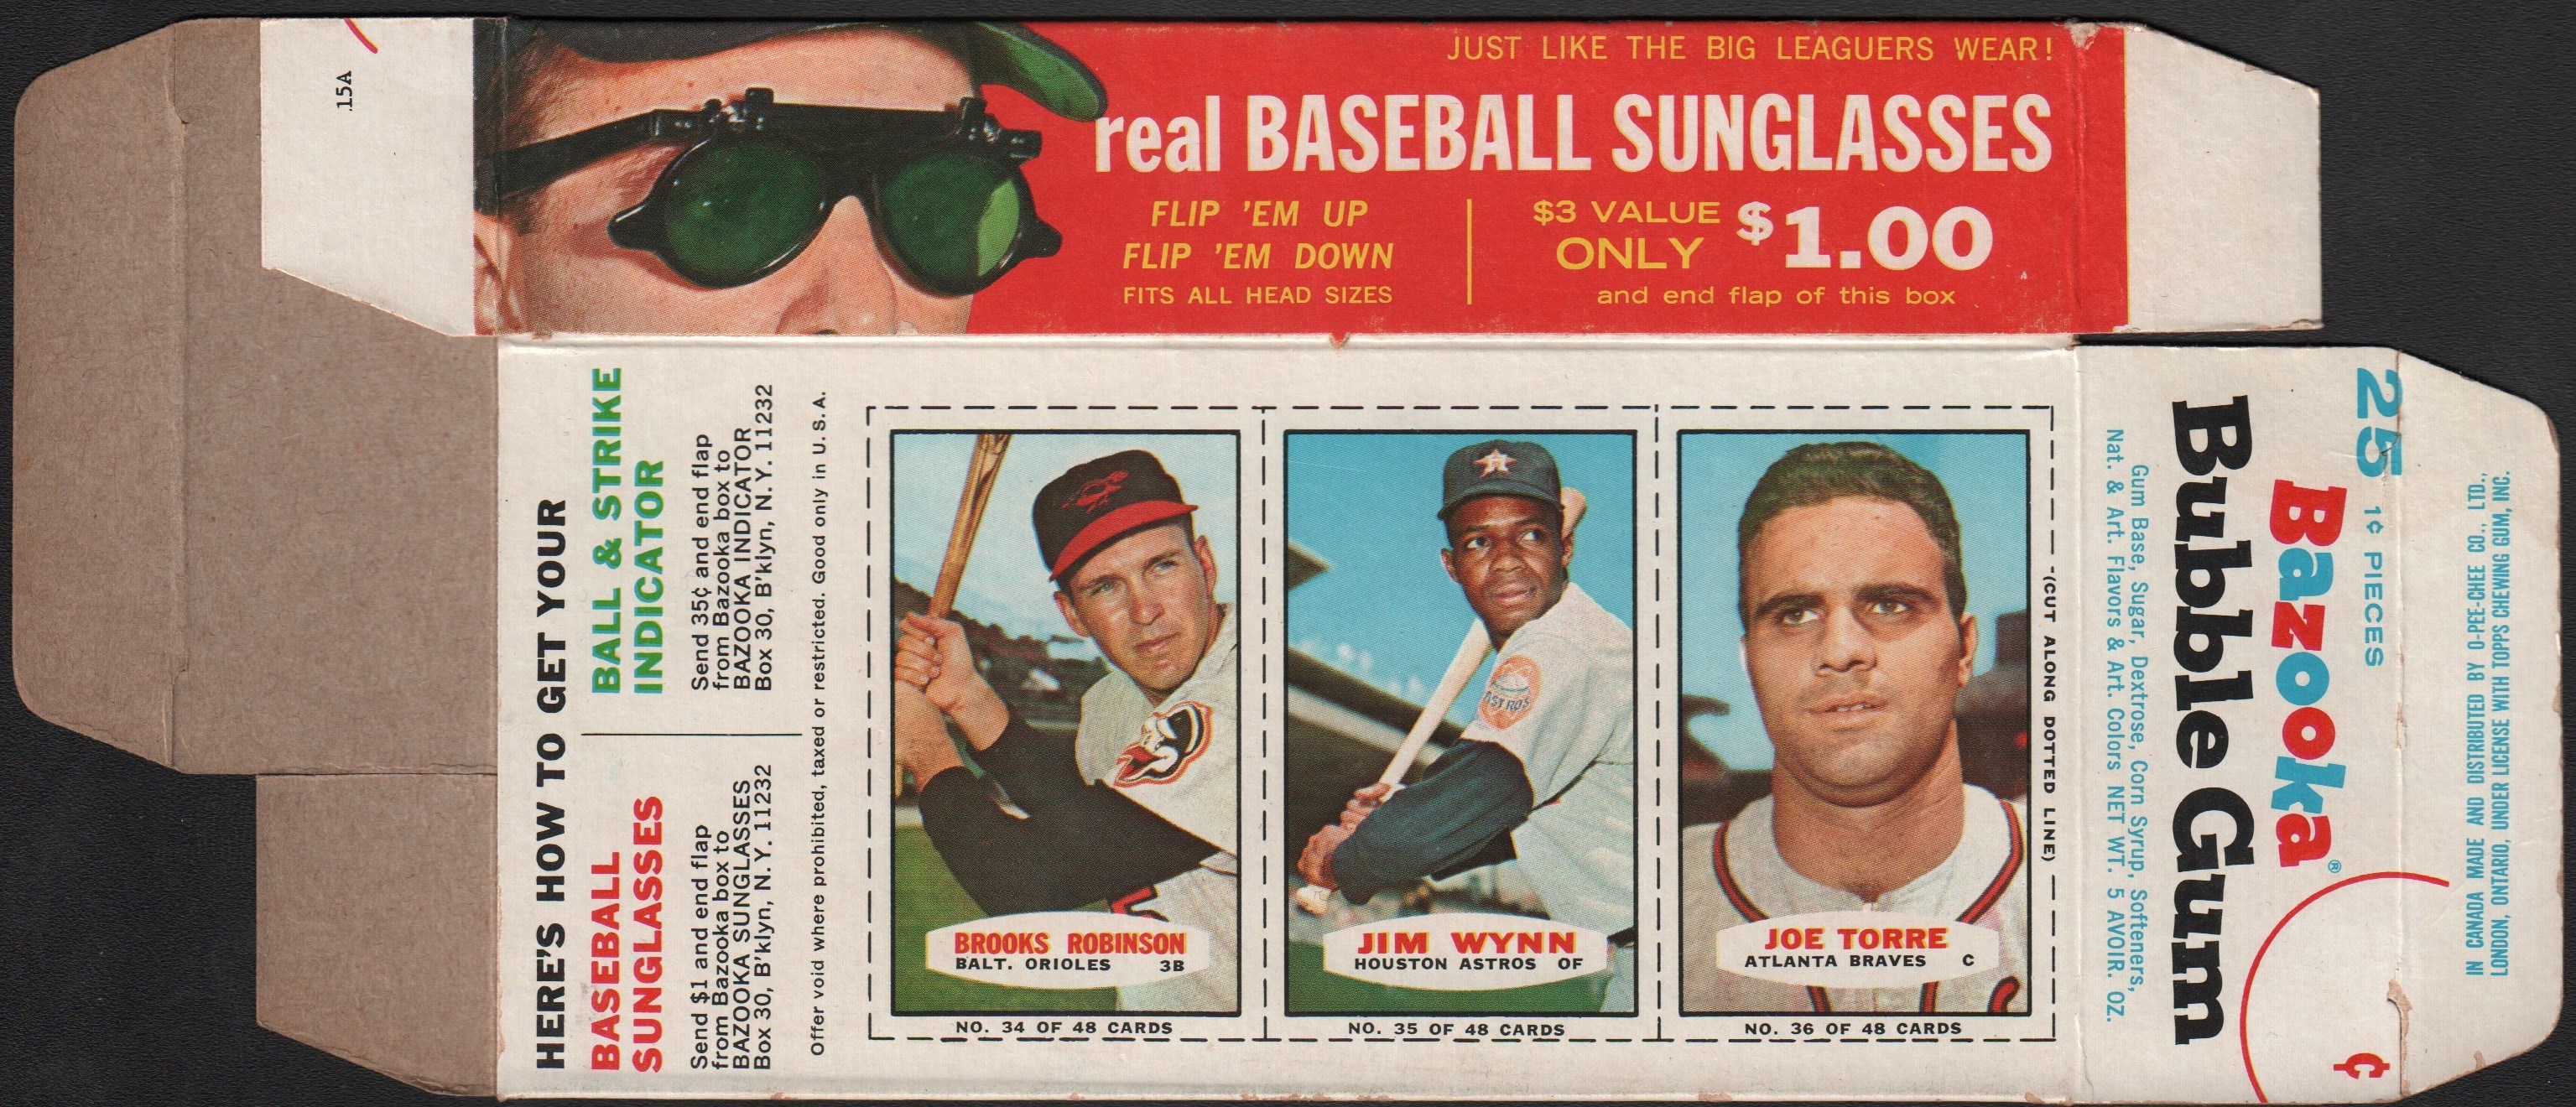 Baseball and Trading Cards - 1966 Bazooka Baseball Card Box w/Robinson/Wynn/Torre